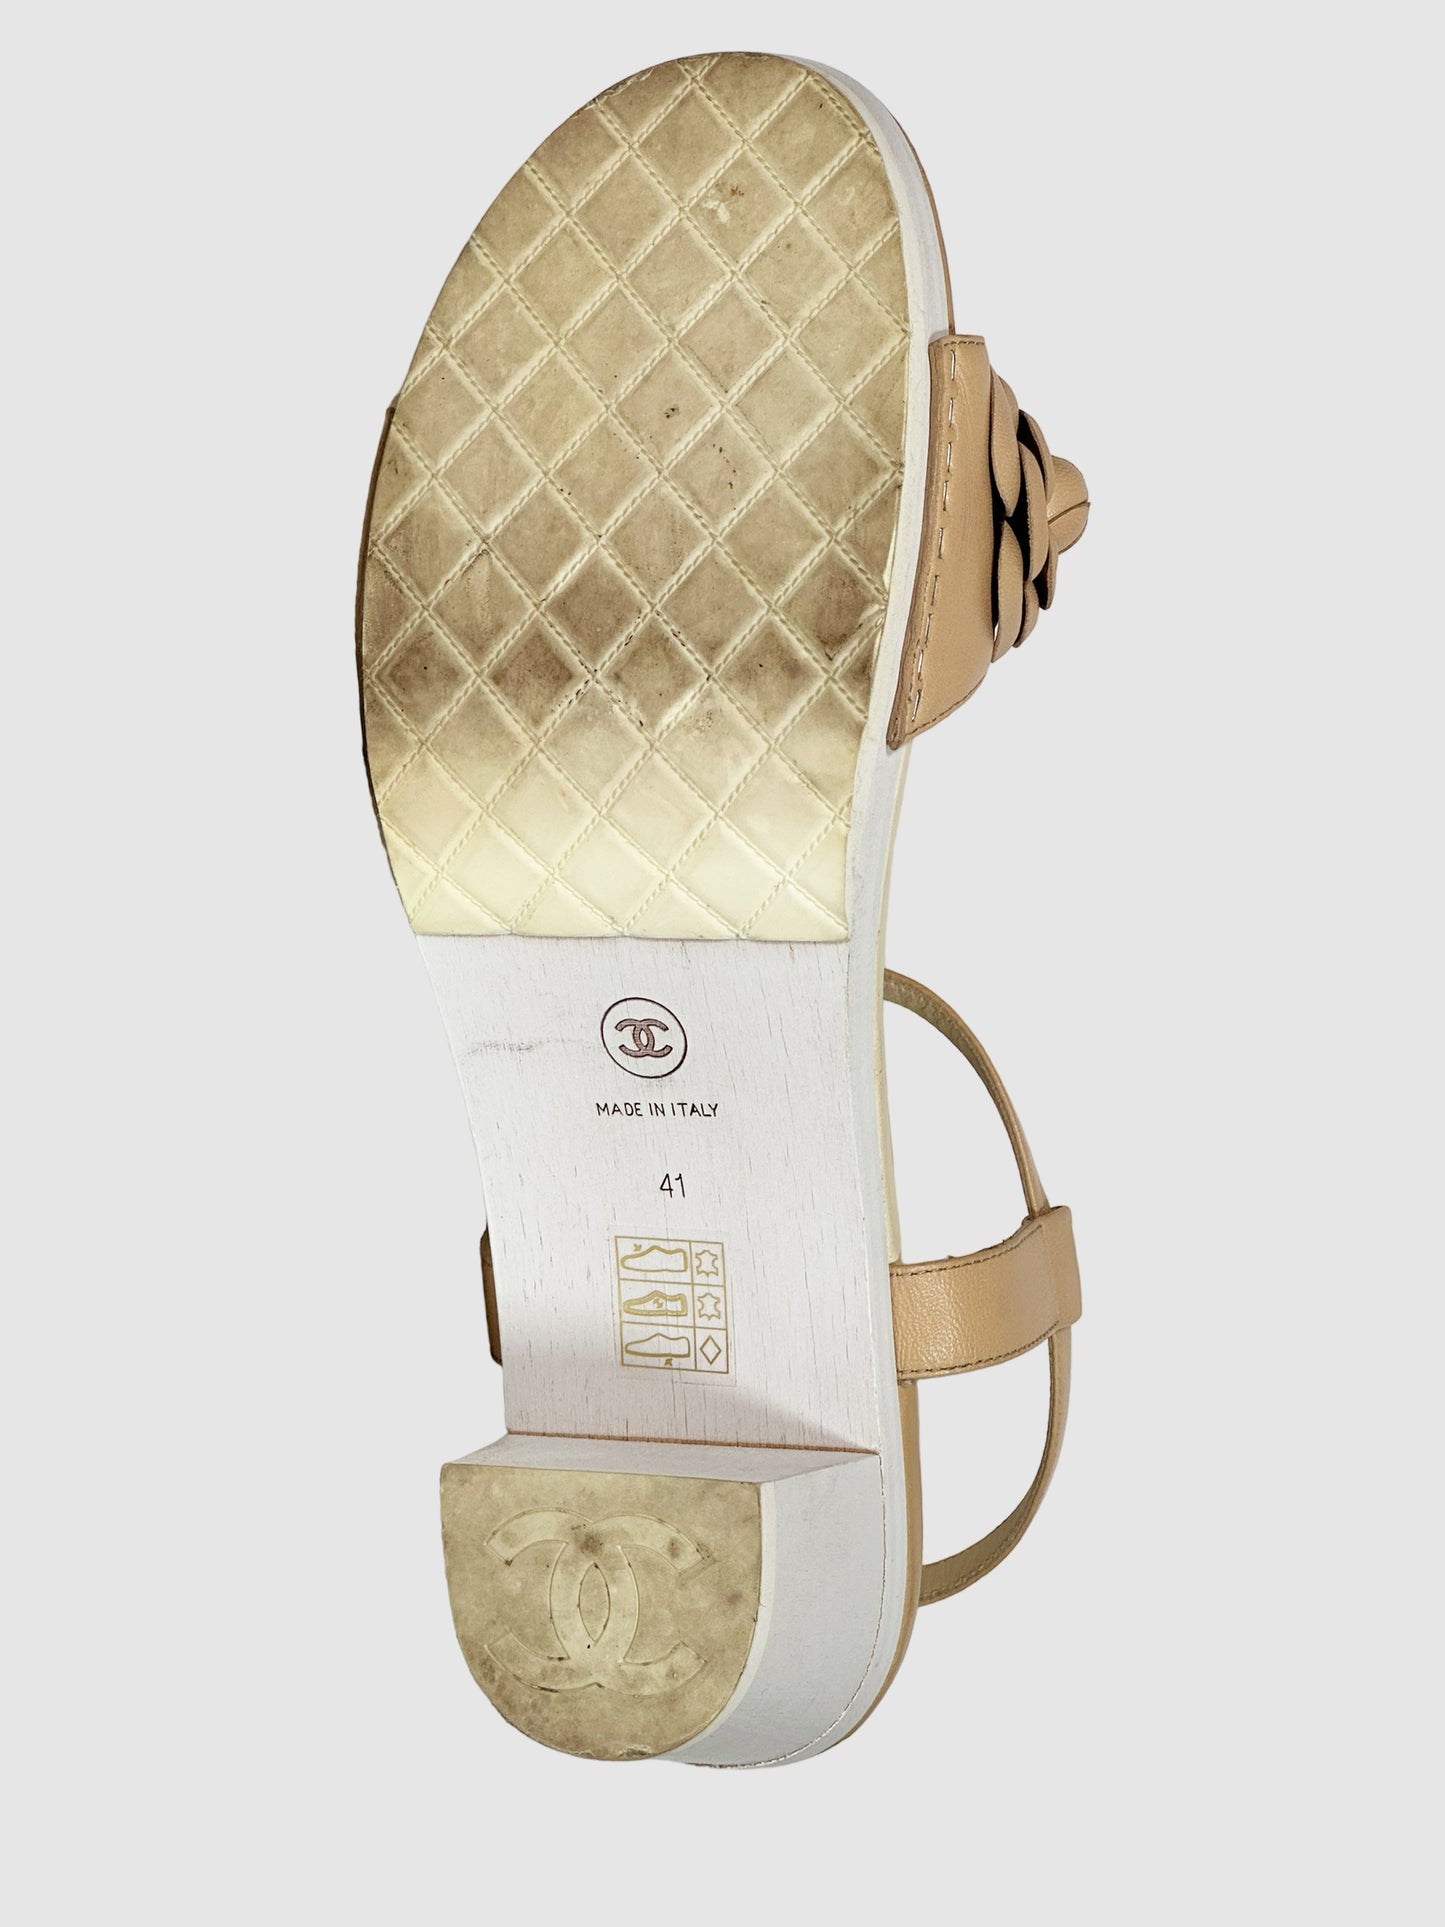 Chanel Interlocking CC Logo Leather Sandals - Size 41